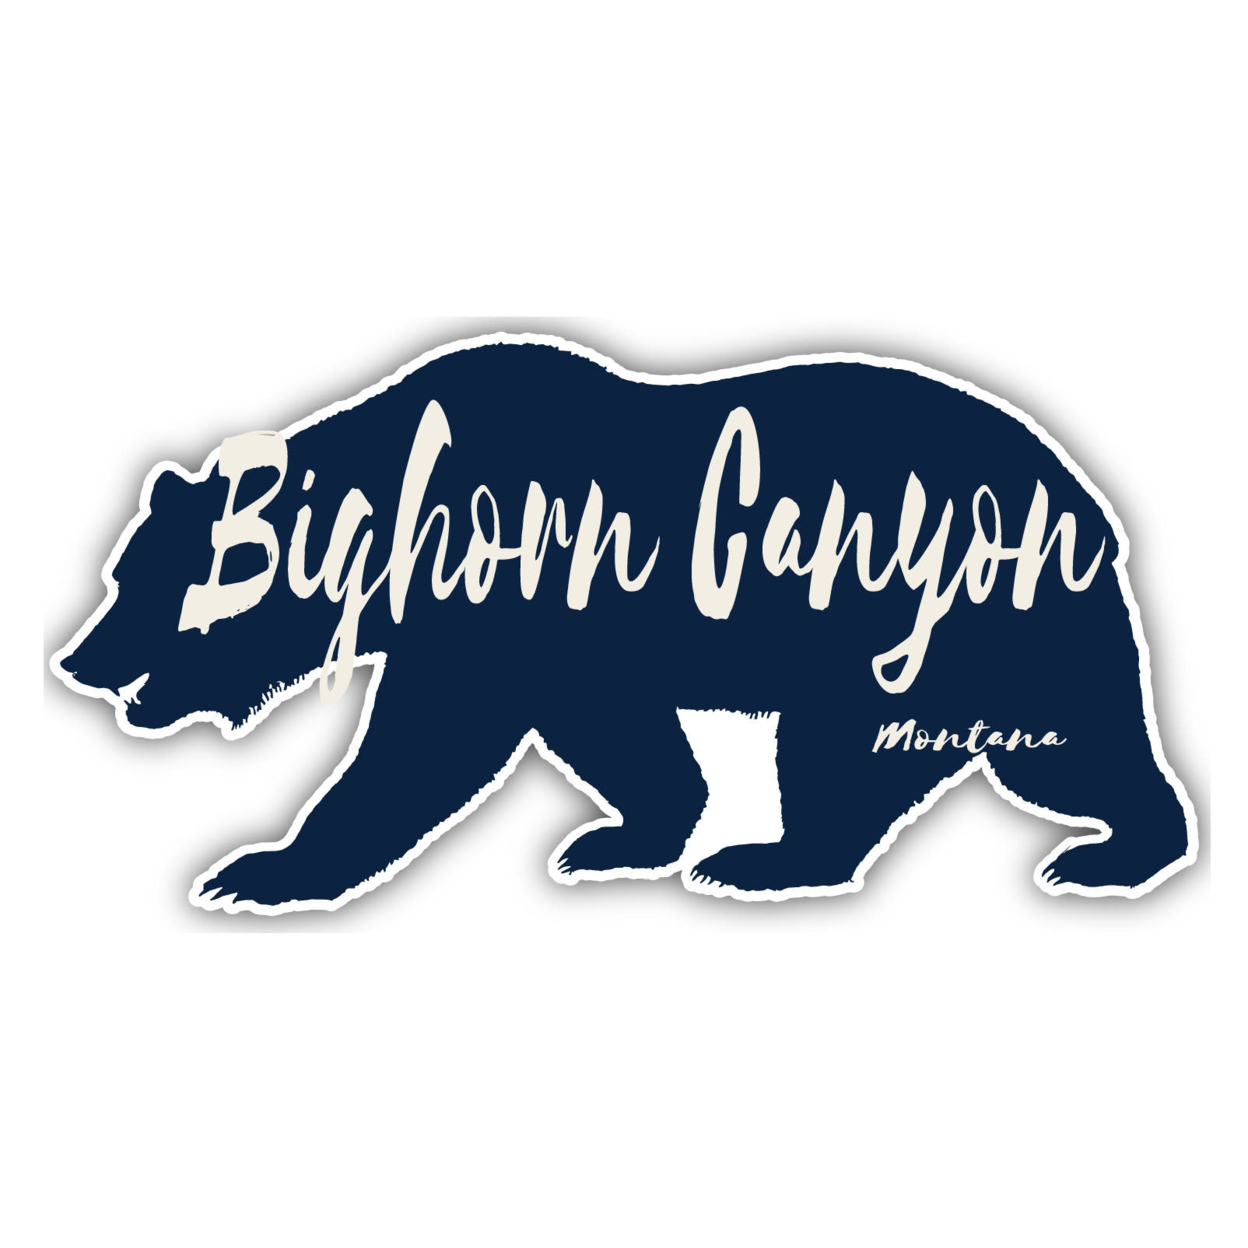 Bighorn Canyon Montana Souvenir Decorative Stickers (Choose Theme And Size) - Single Unit, 2-Inch, Bear